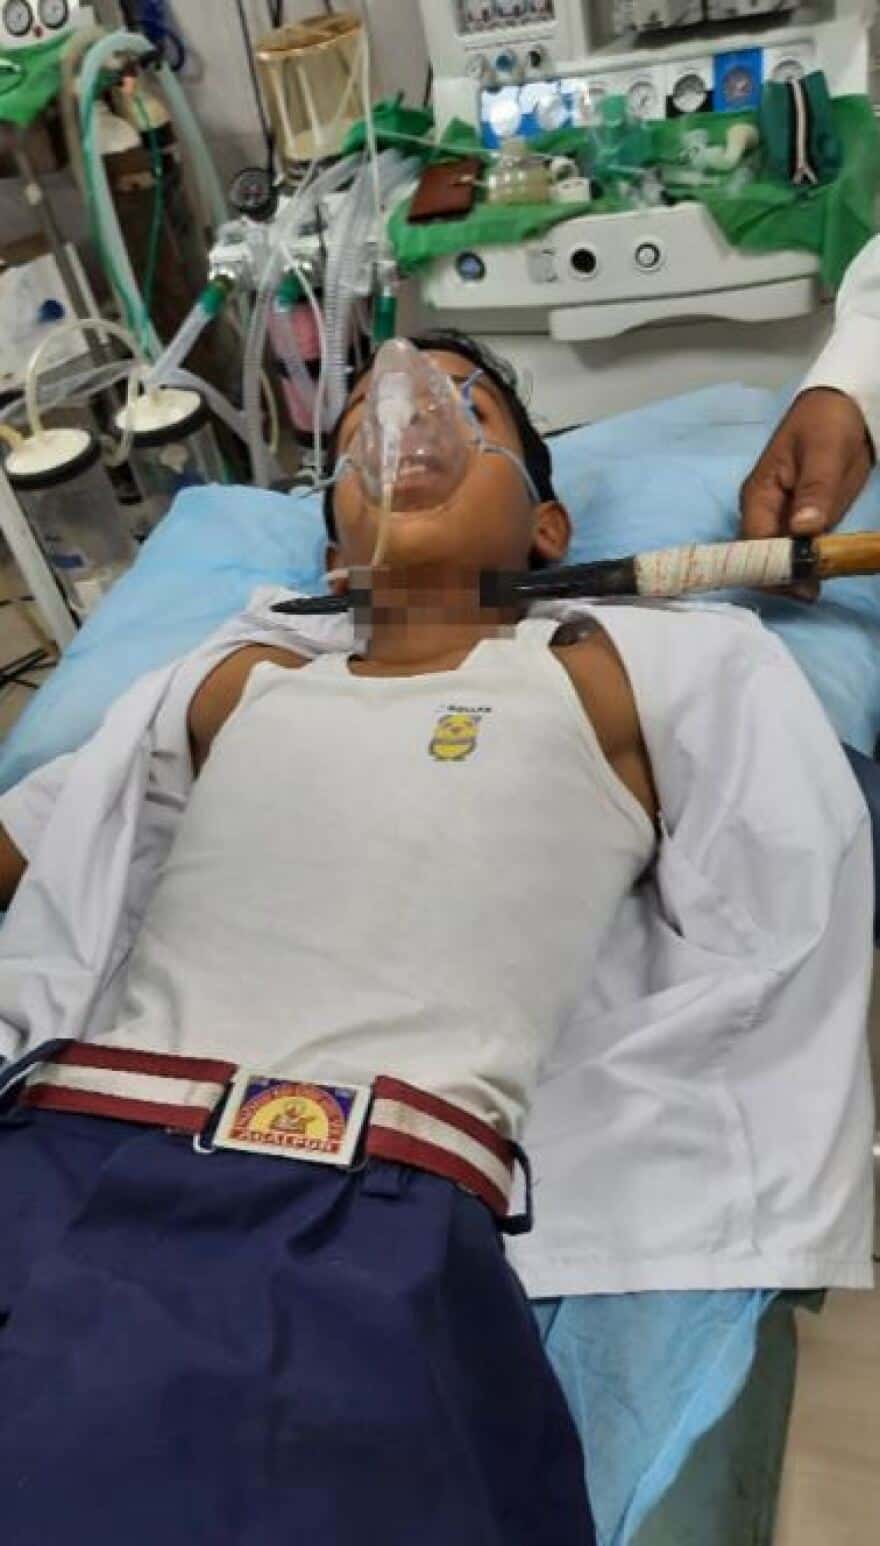 akontio 2 - Αδιανόητο περιστατικό στην Ινδία: Ακόντιο καρφώθηκε στον λαιμό 14χρονου - Συγκλονιστικές εικόνες και βίντεο